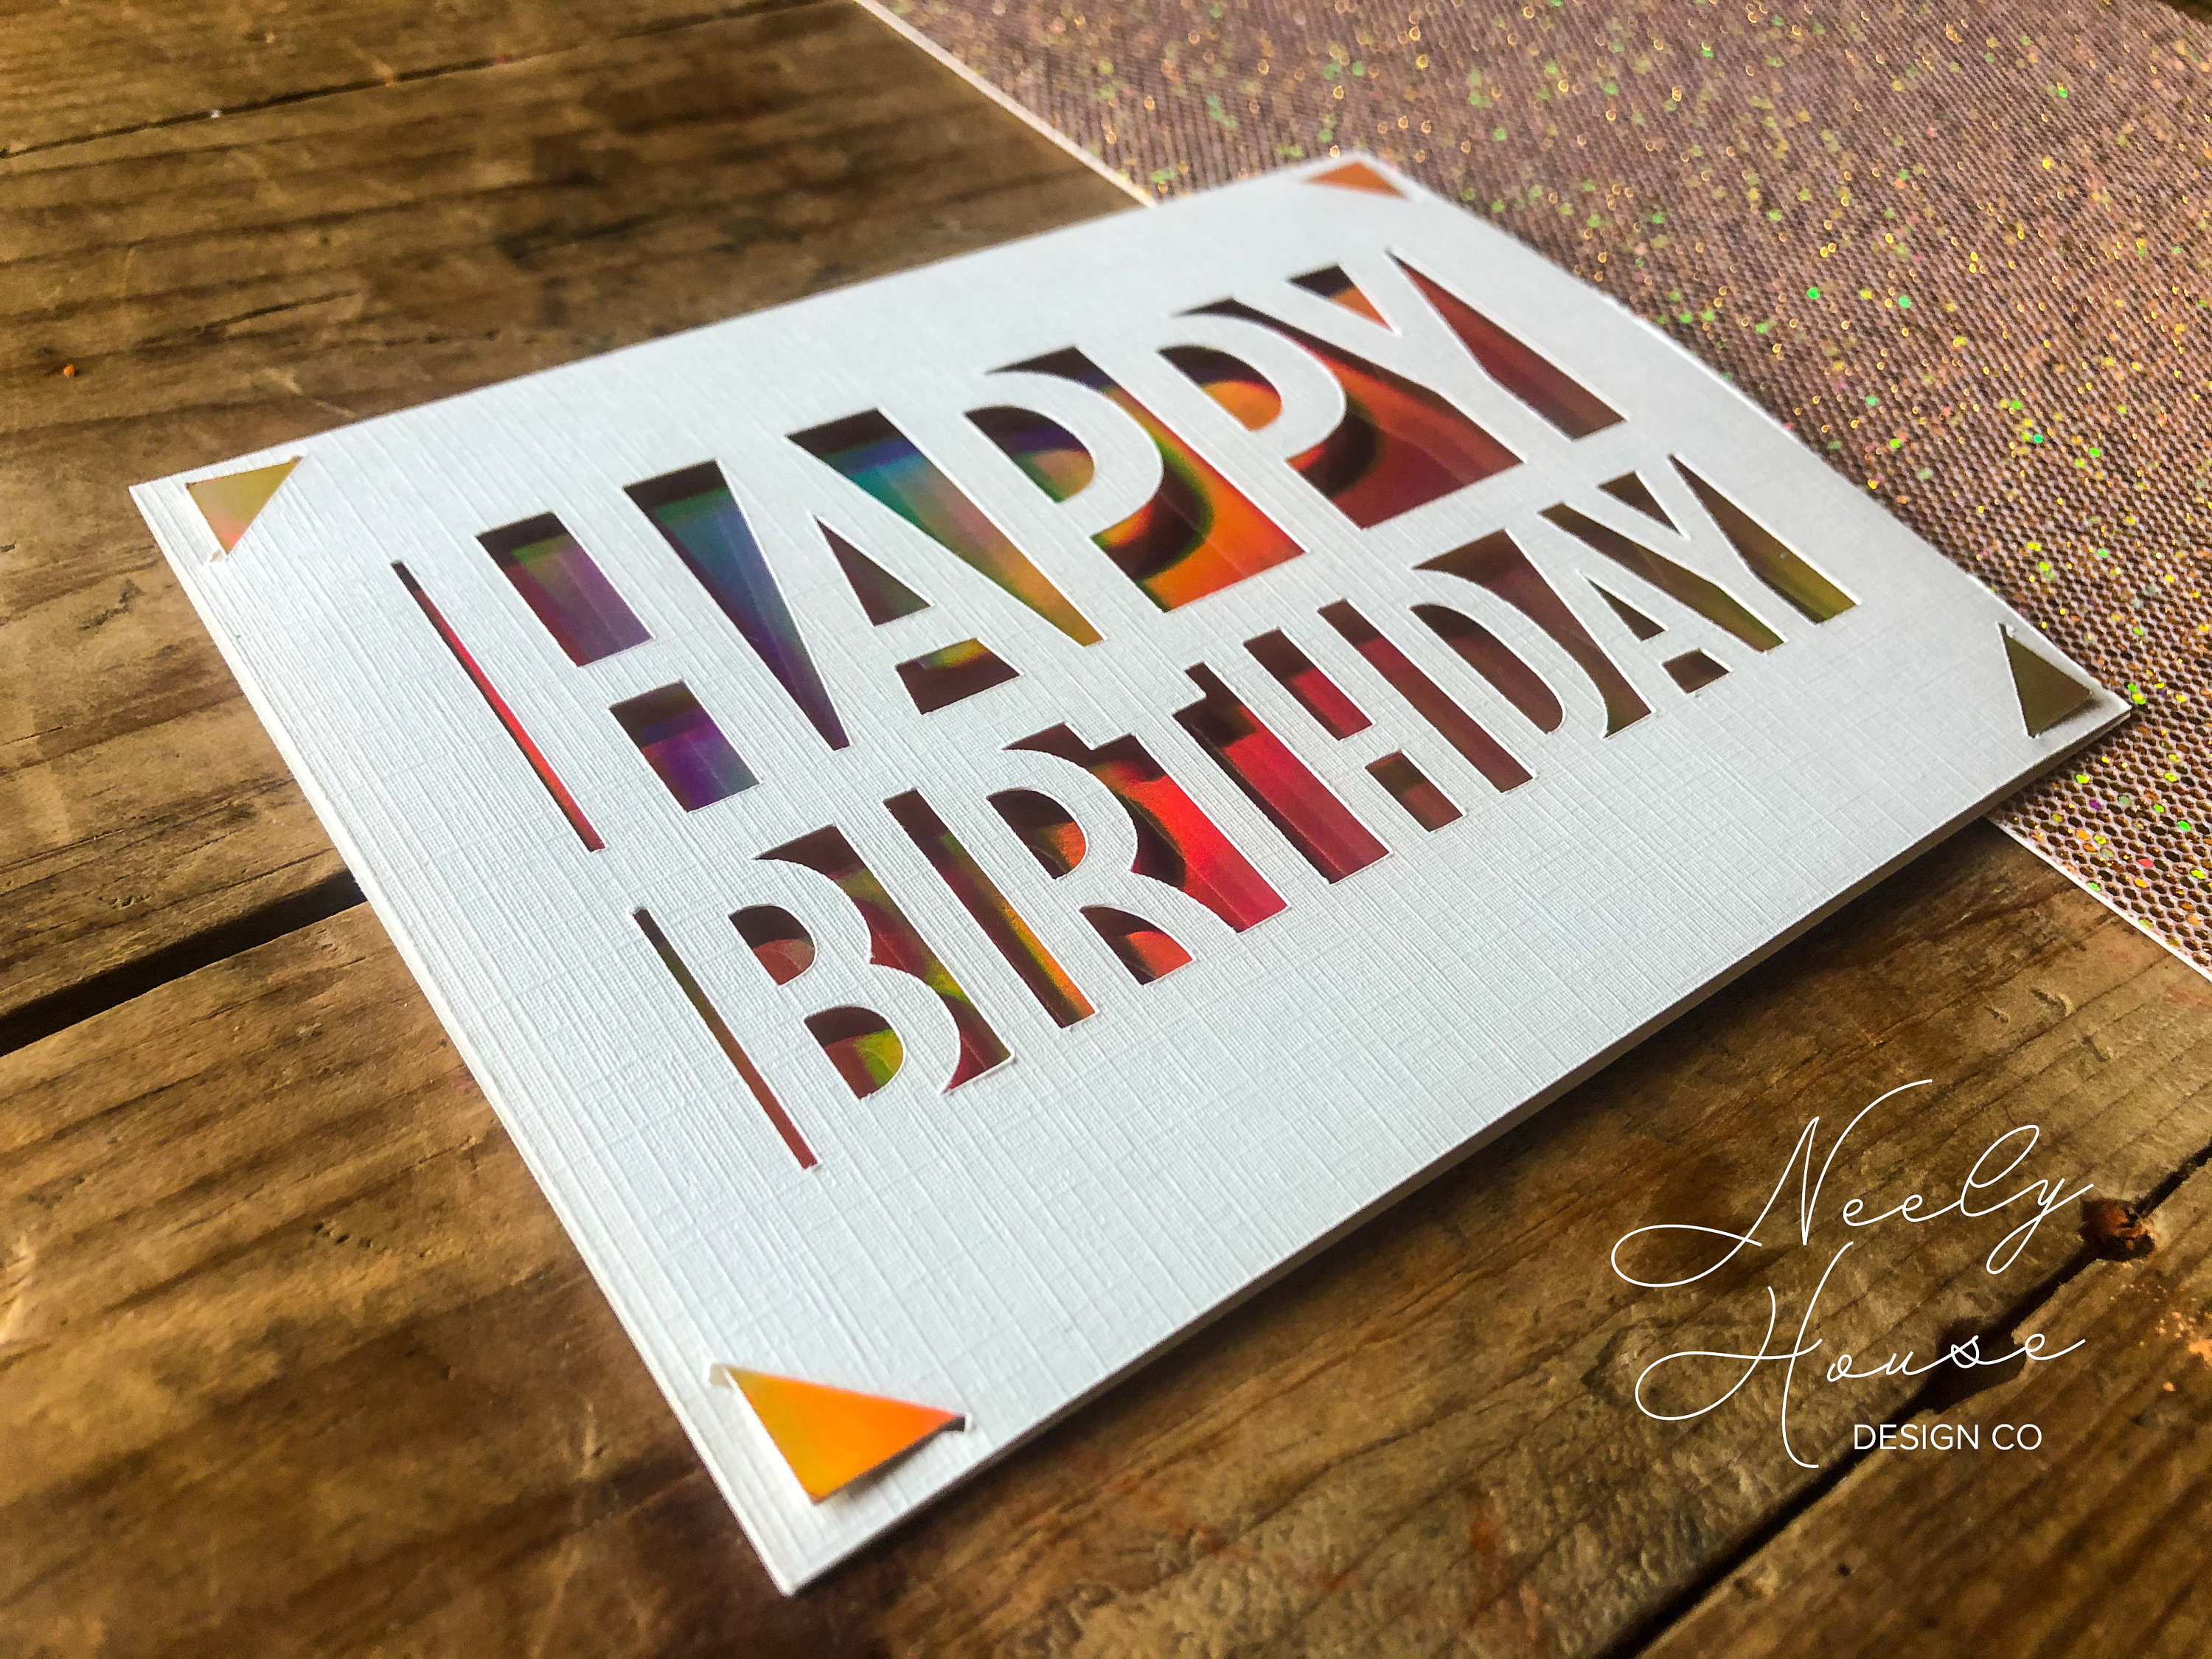 Easy Free Birthday Card Templates Cricut